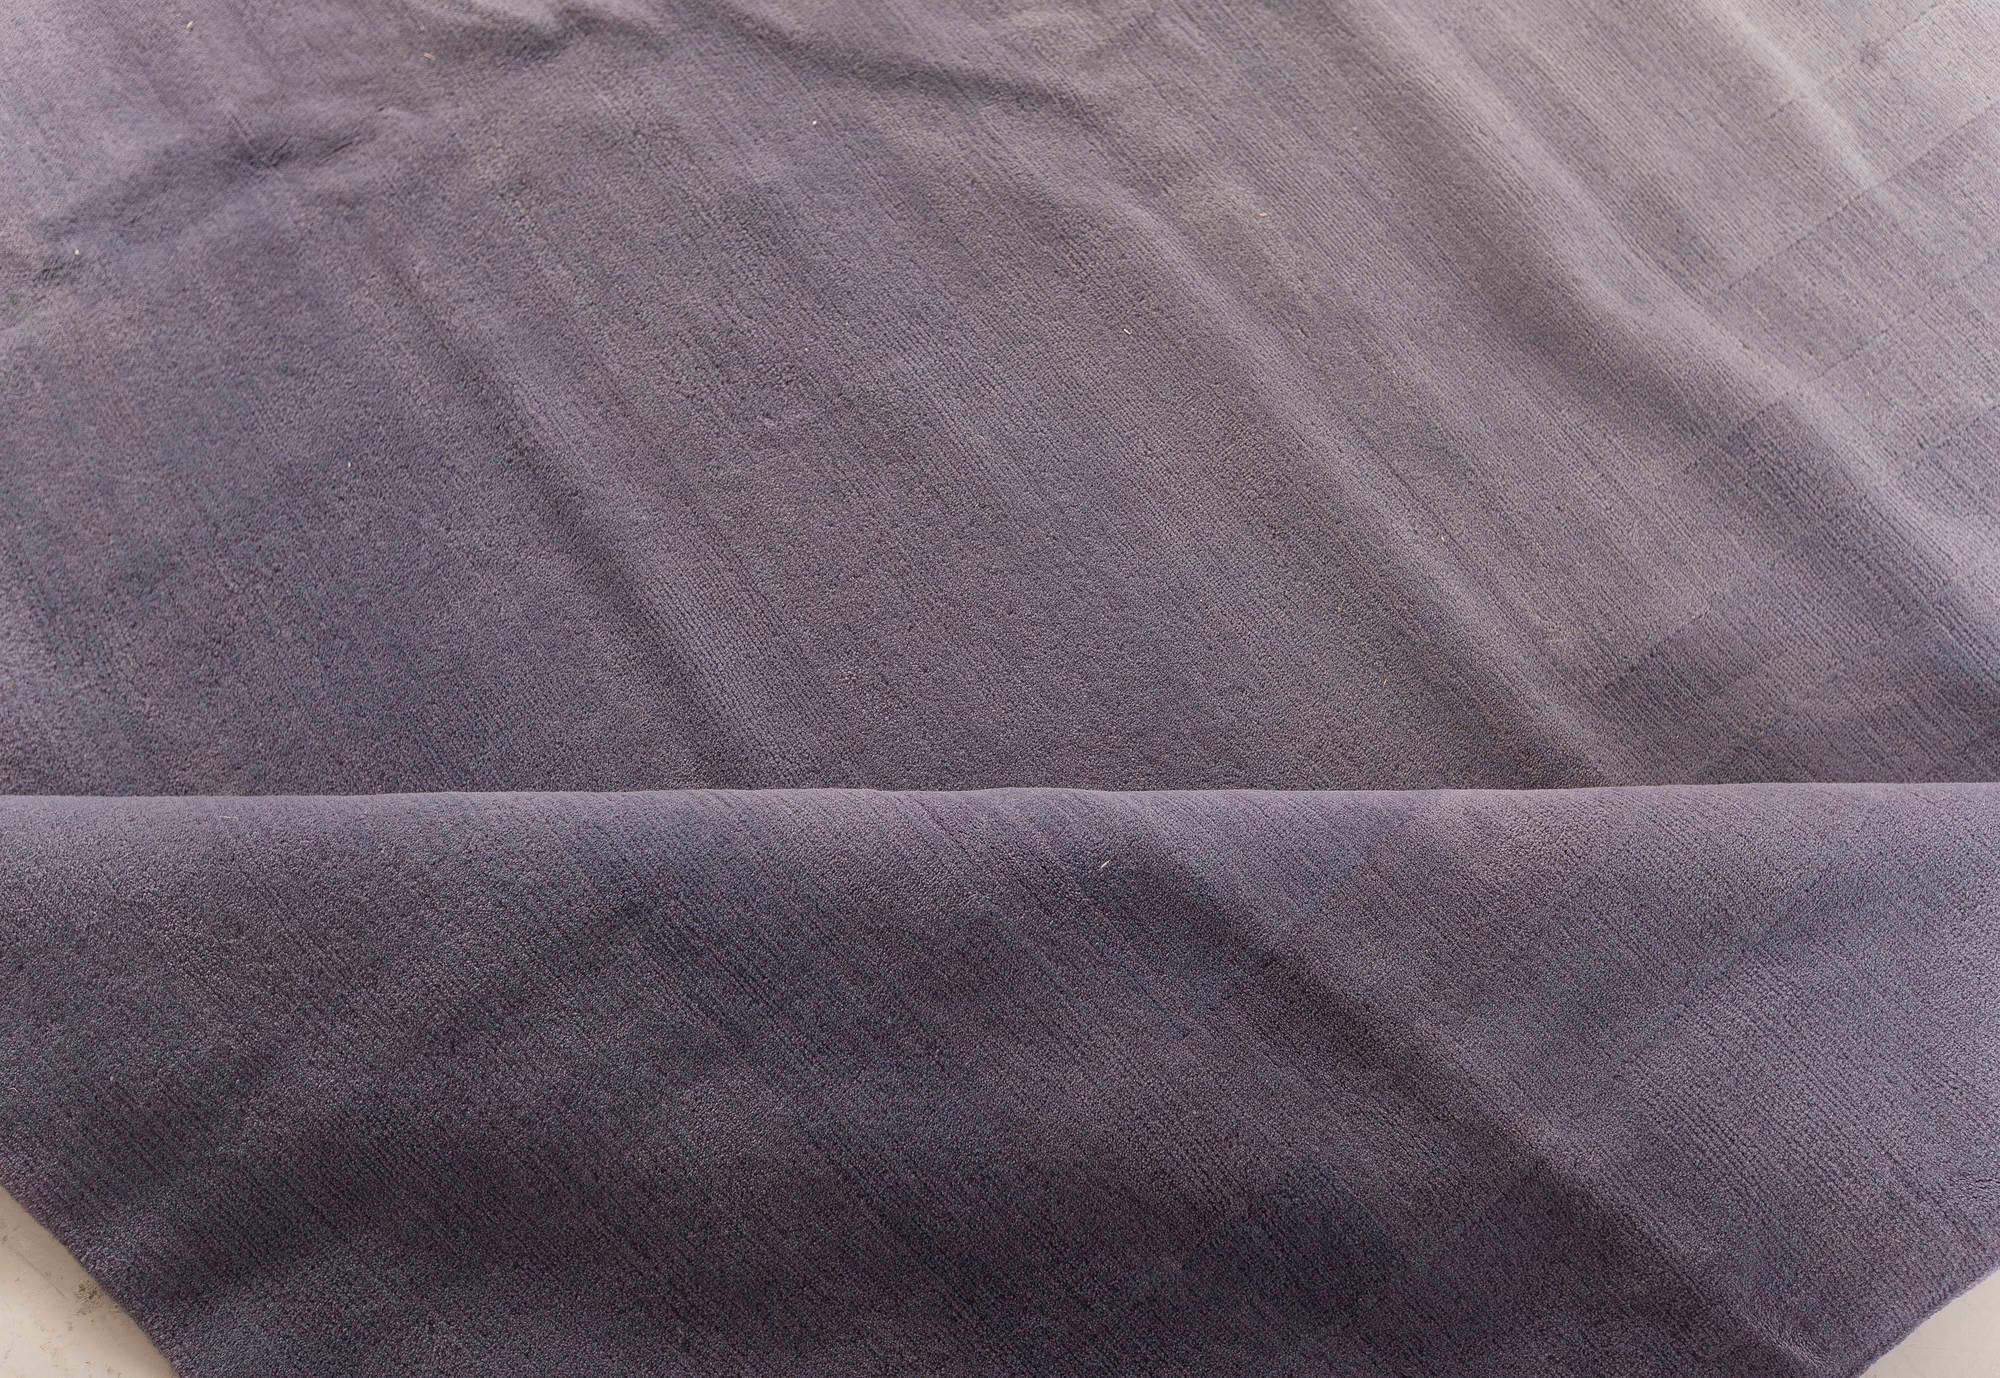 Contemporary extra large ombre purple mohair rug by Doris Leslie Blau.
Size: 15.0